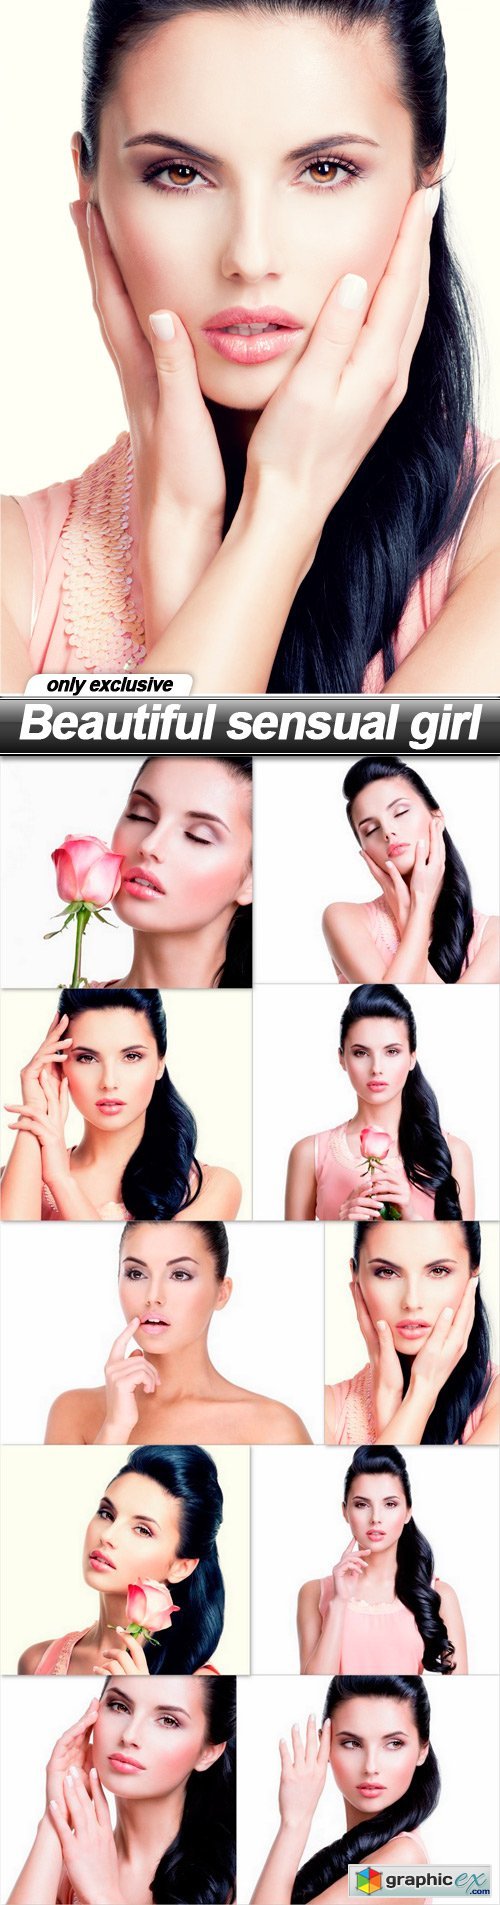 Beautiful sensual girl - 10 UHQ JPEG